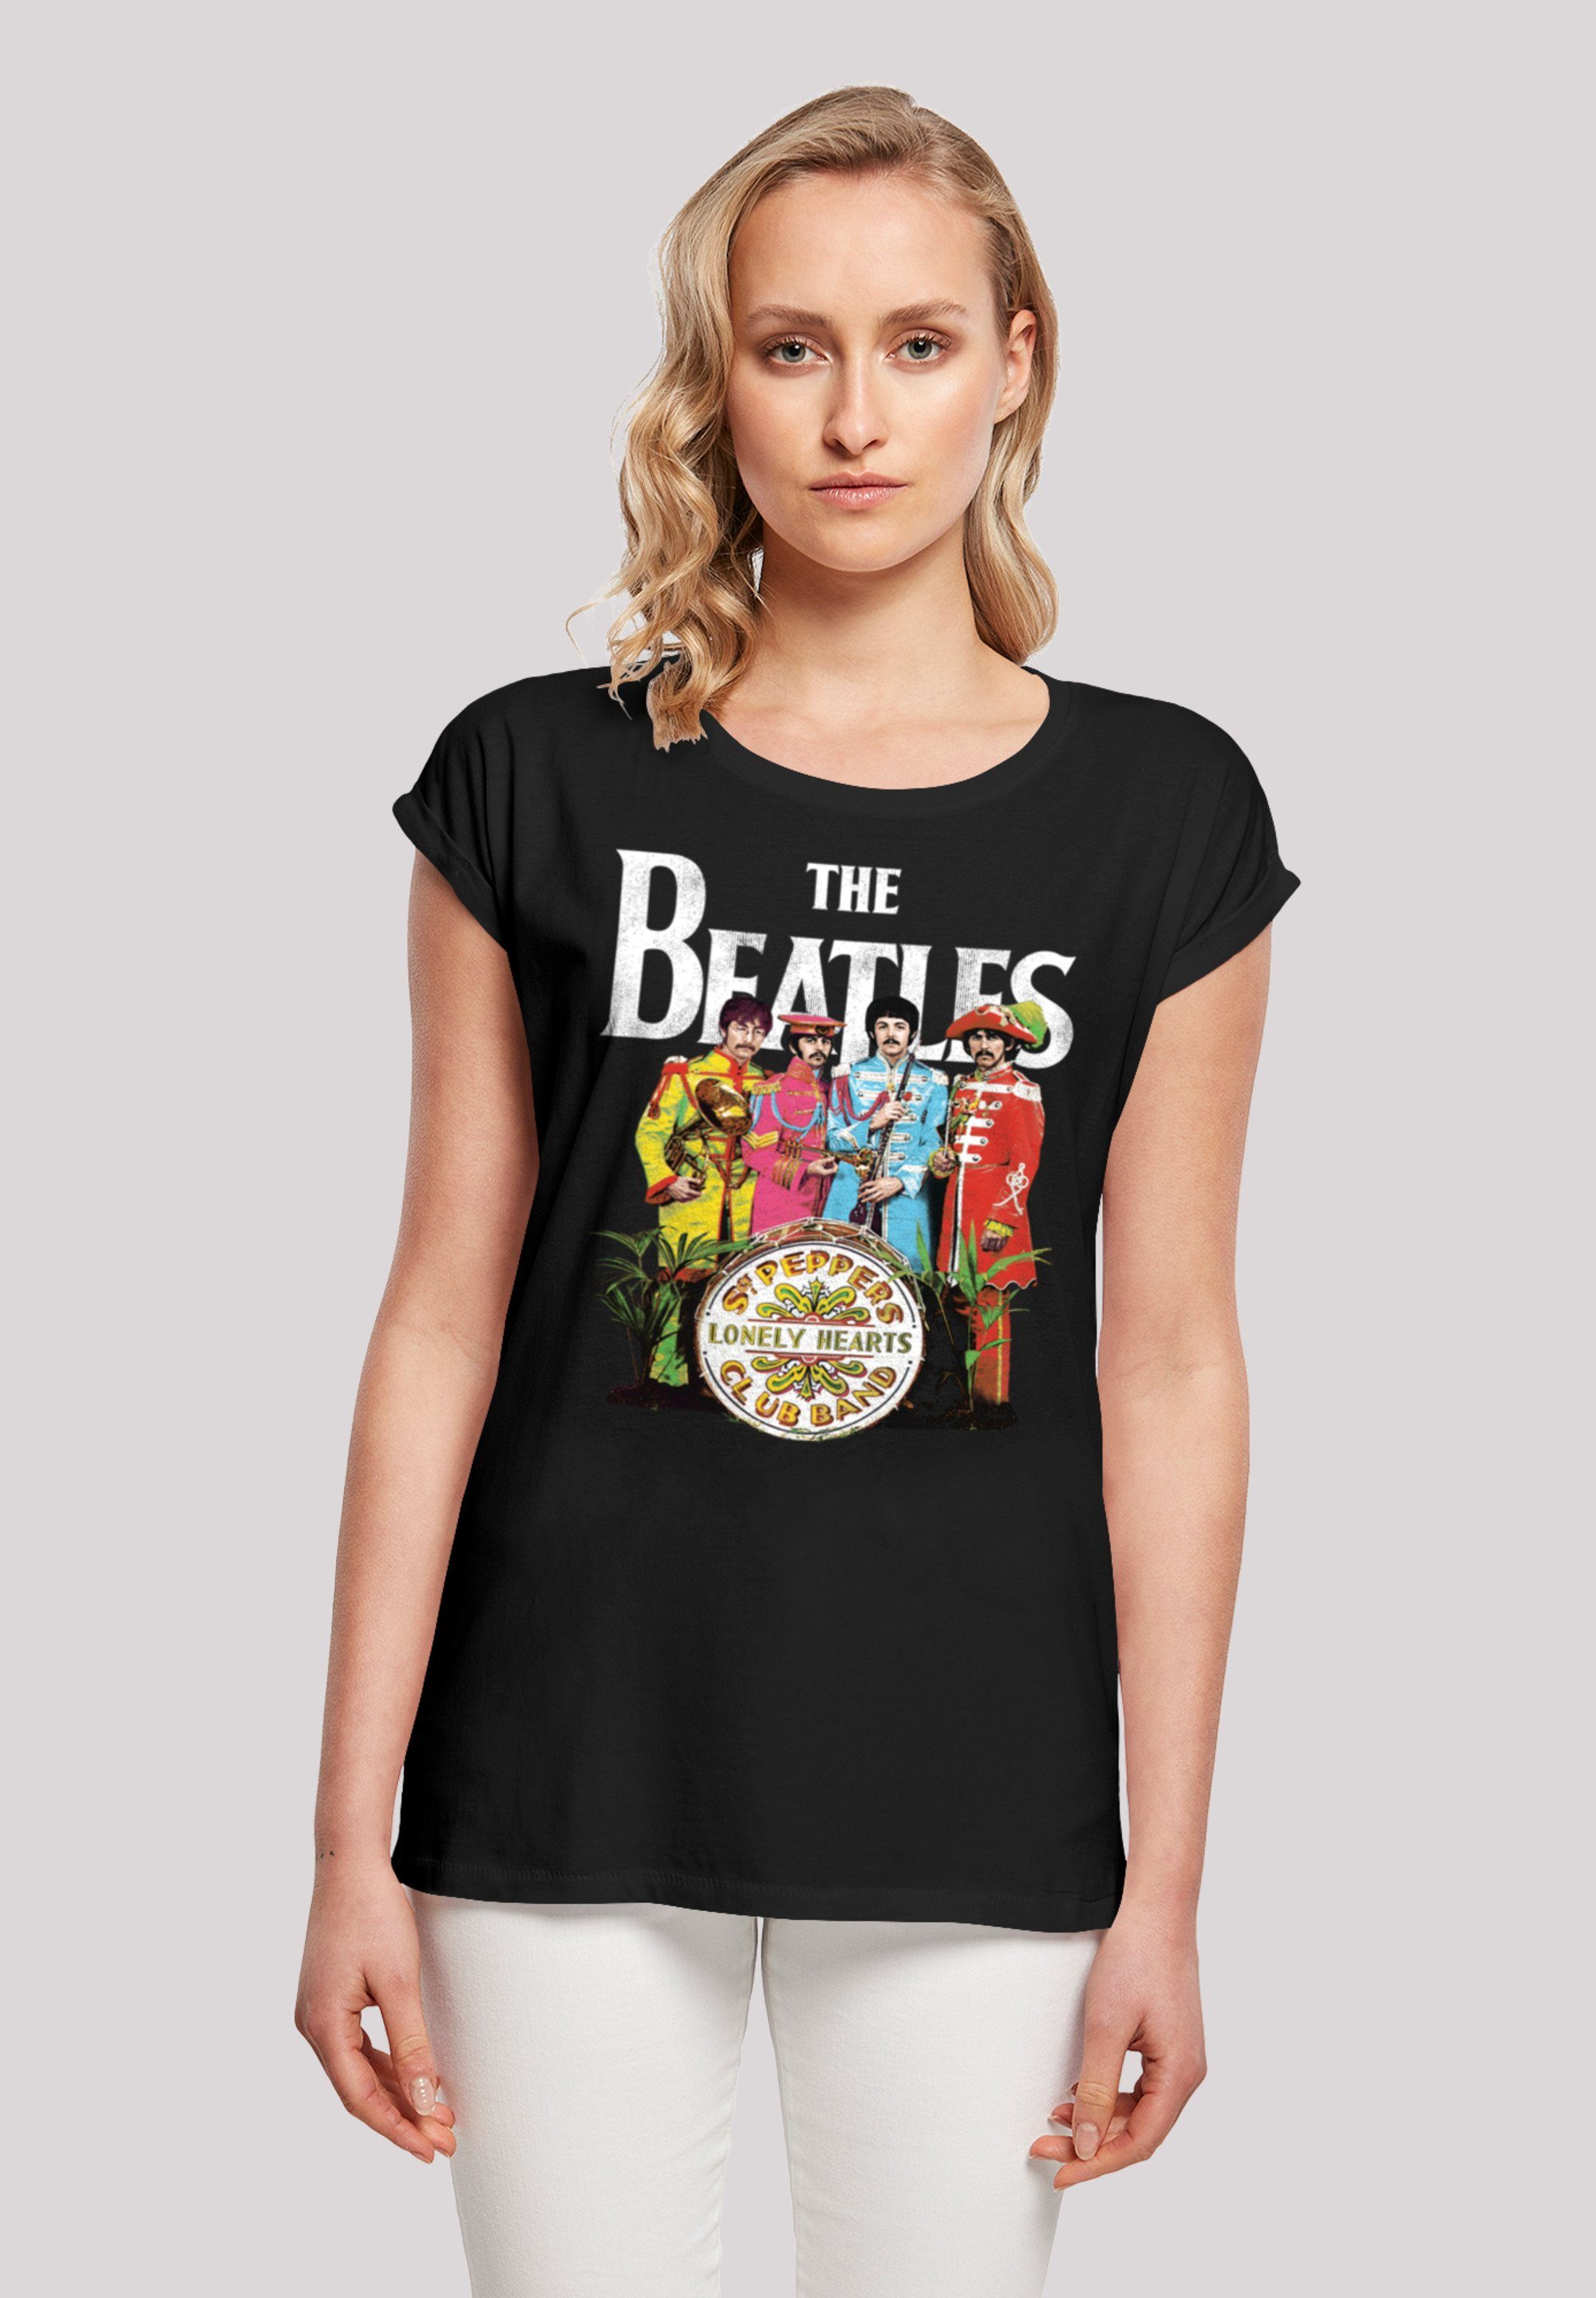 F4NT4STIC T-Shirt The Beatles Band Angabe Sgt Keine Pepper Black